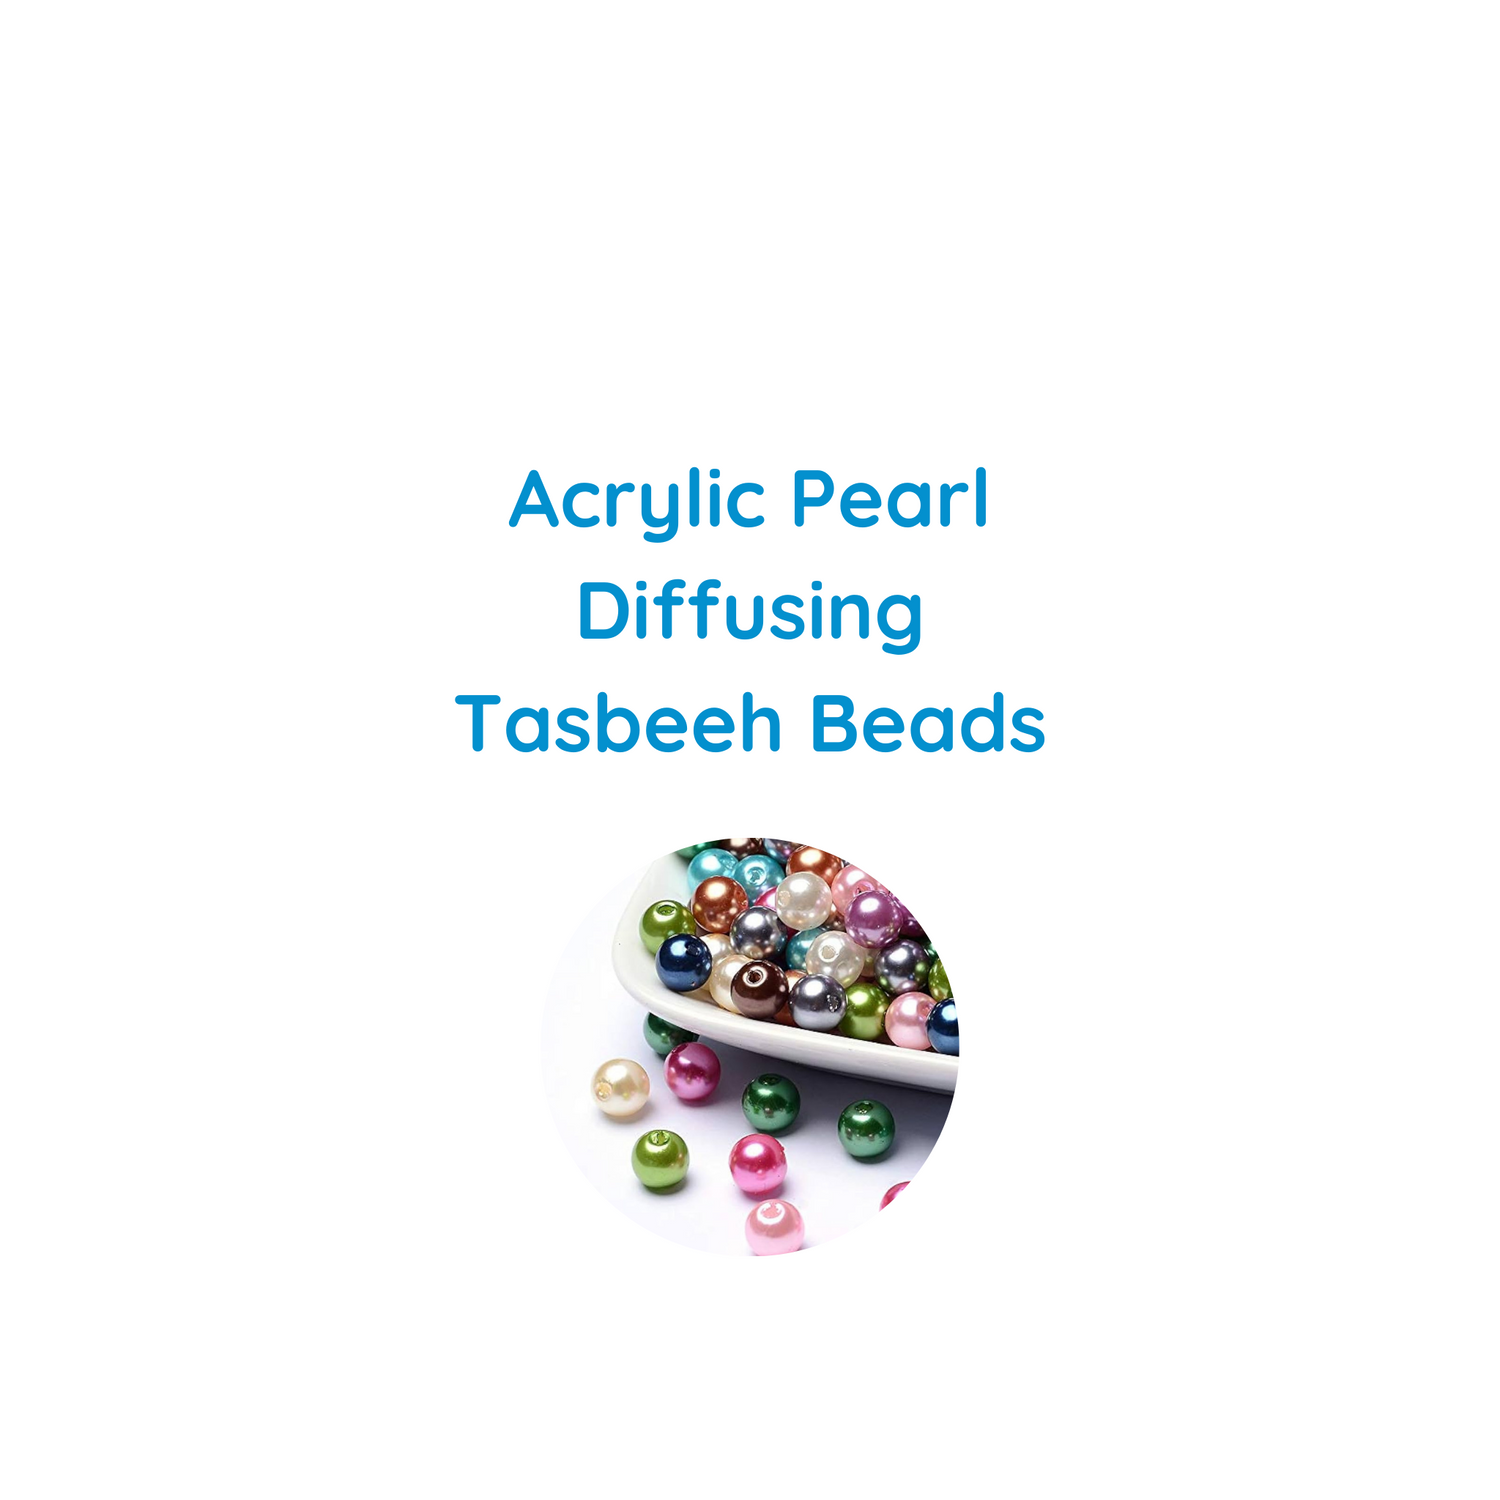 Acrylic Pearl Diffusing Tasbeeh Beads (Coming Soon)